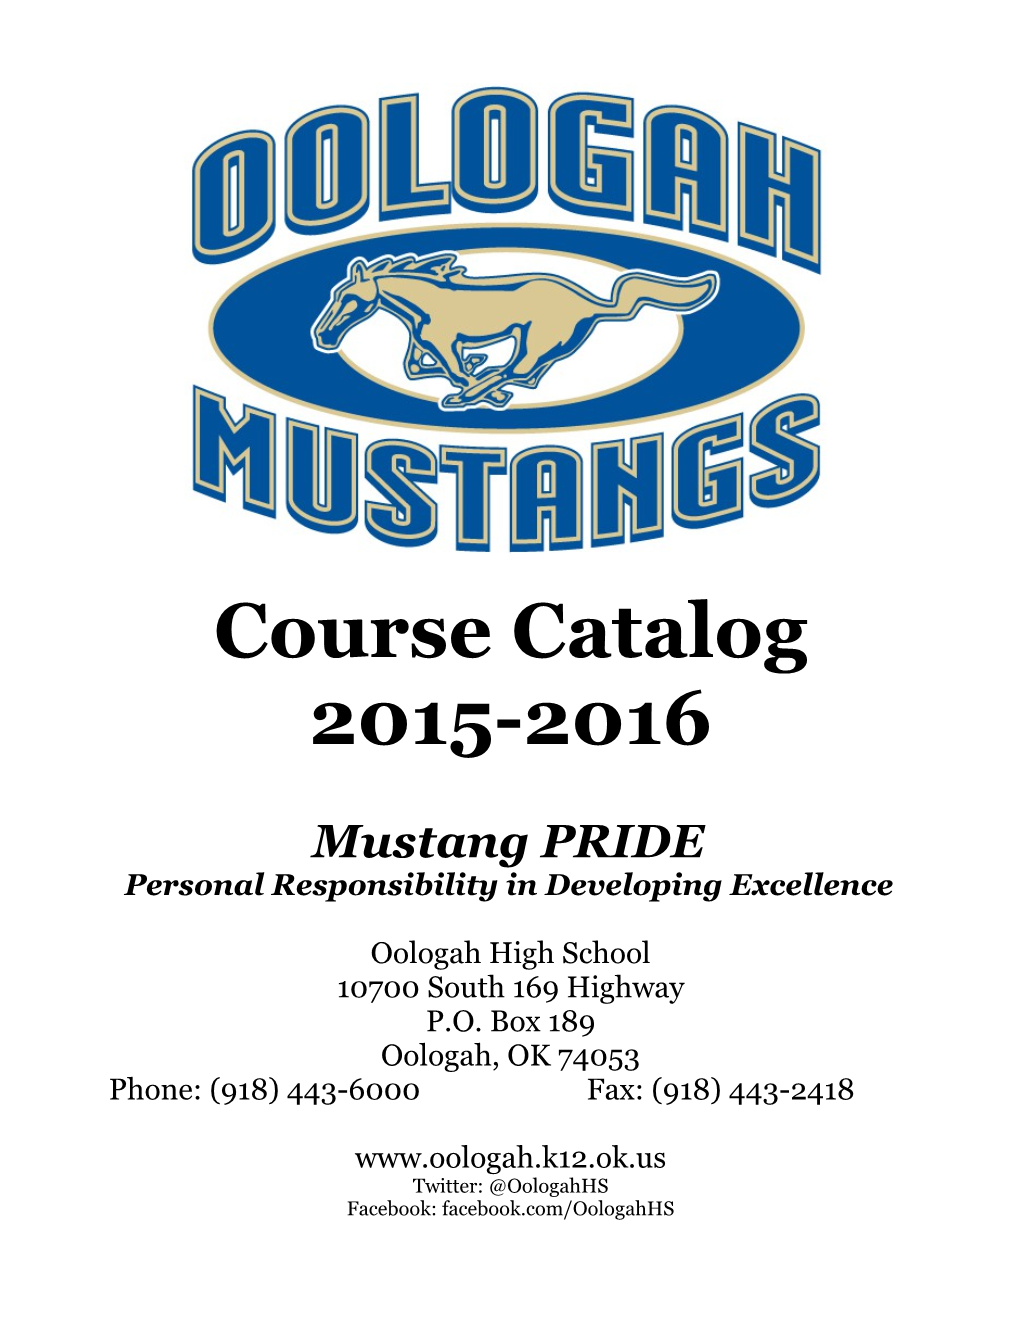 Oologah High School 2015-2016 Course Catalog